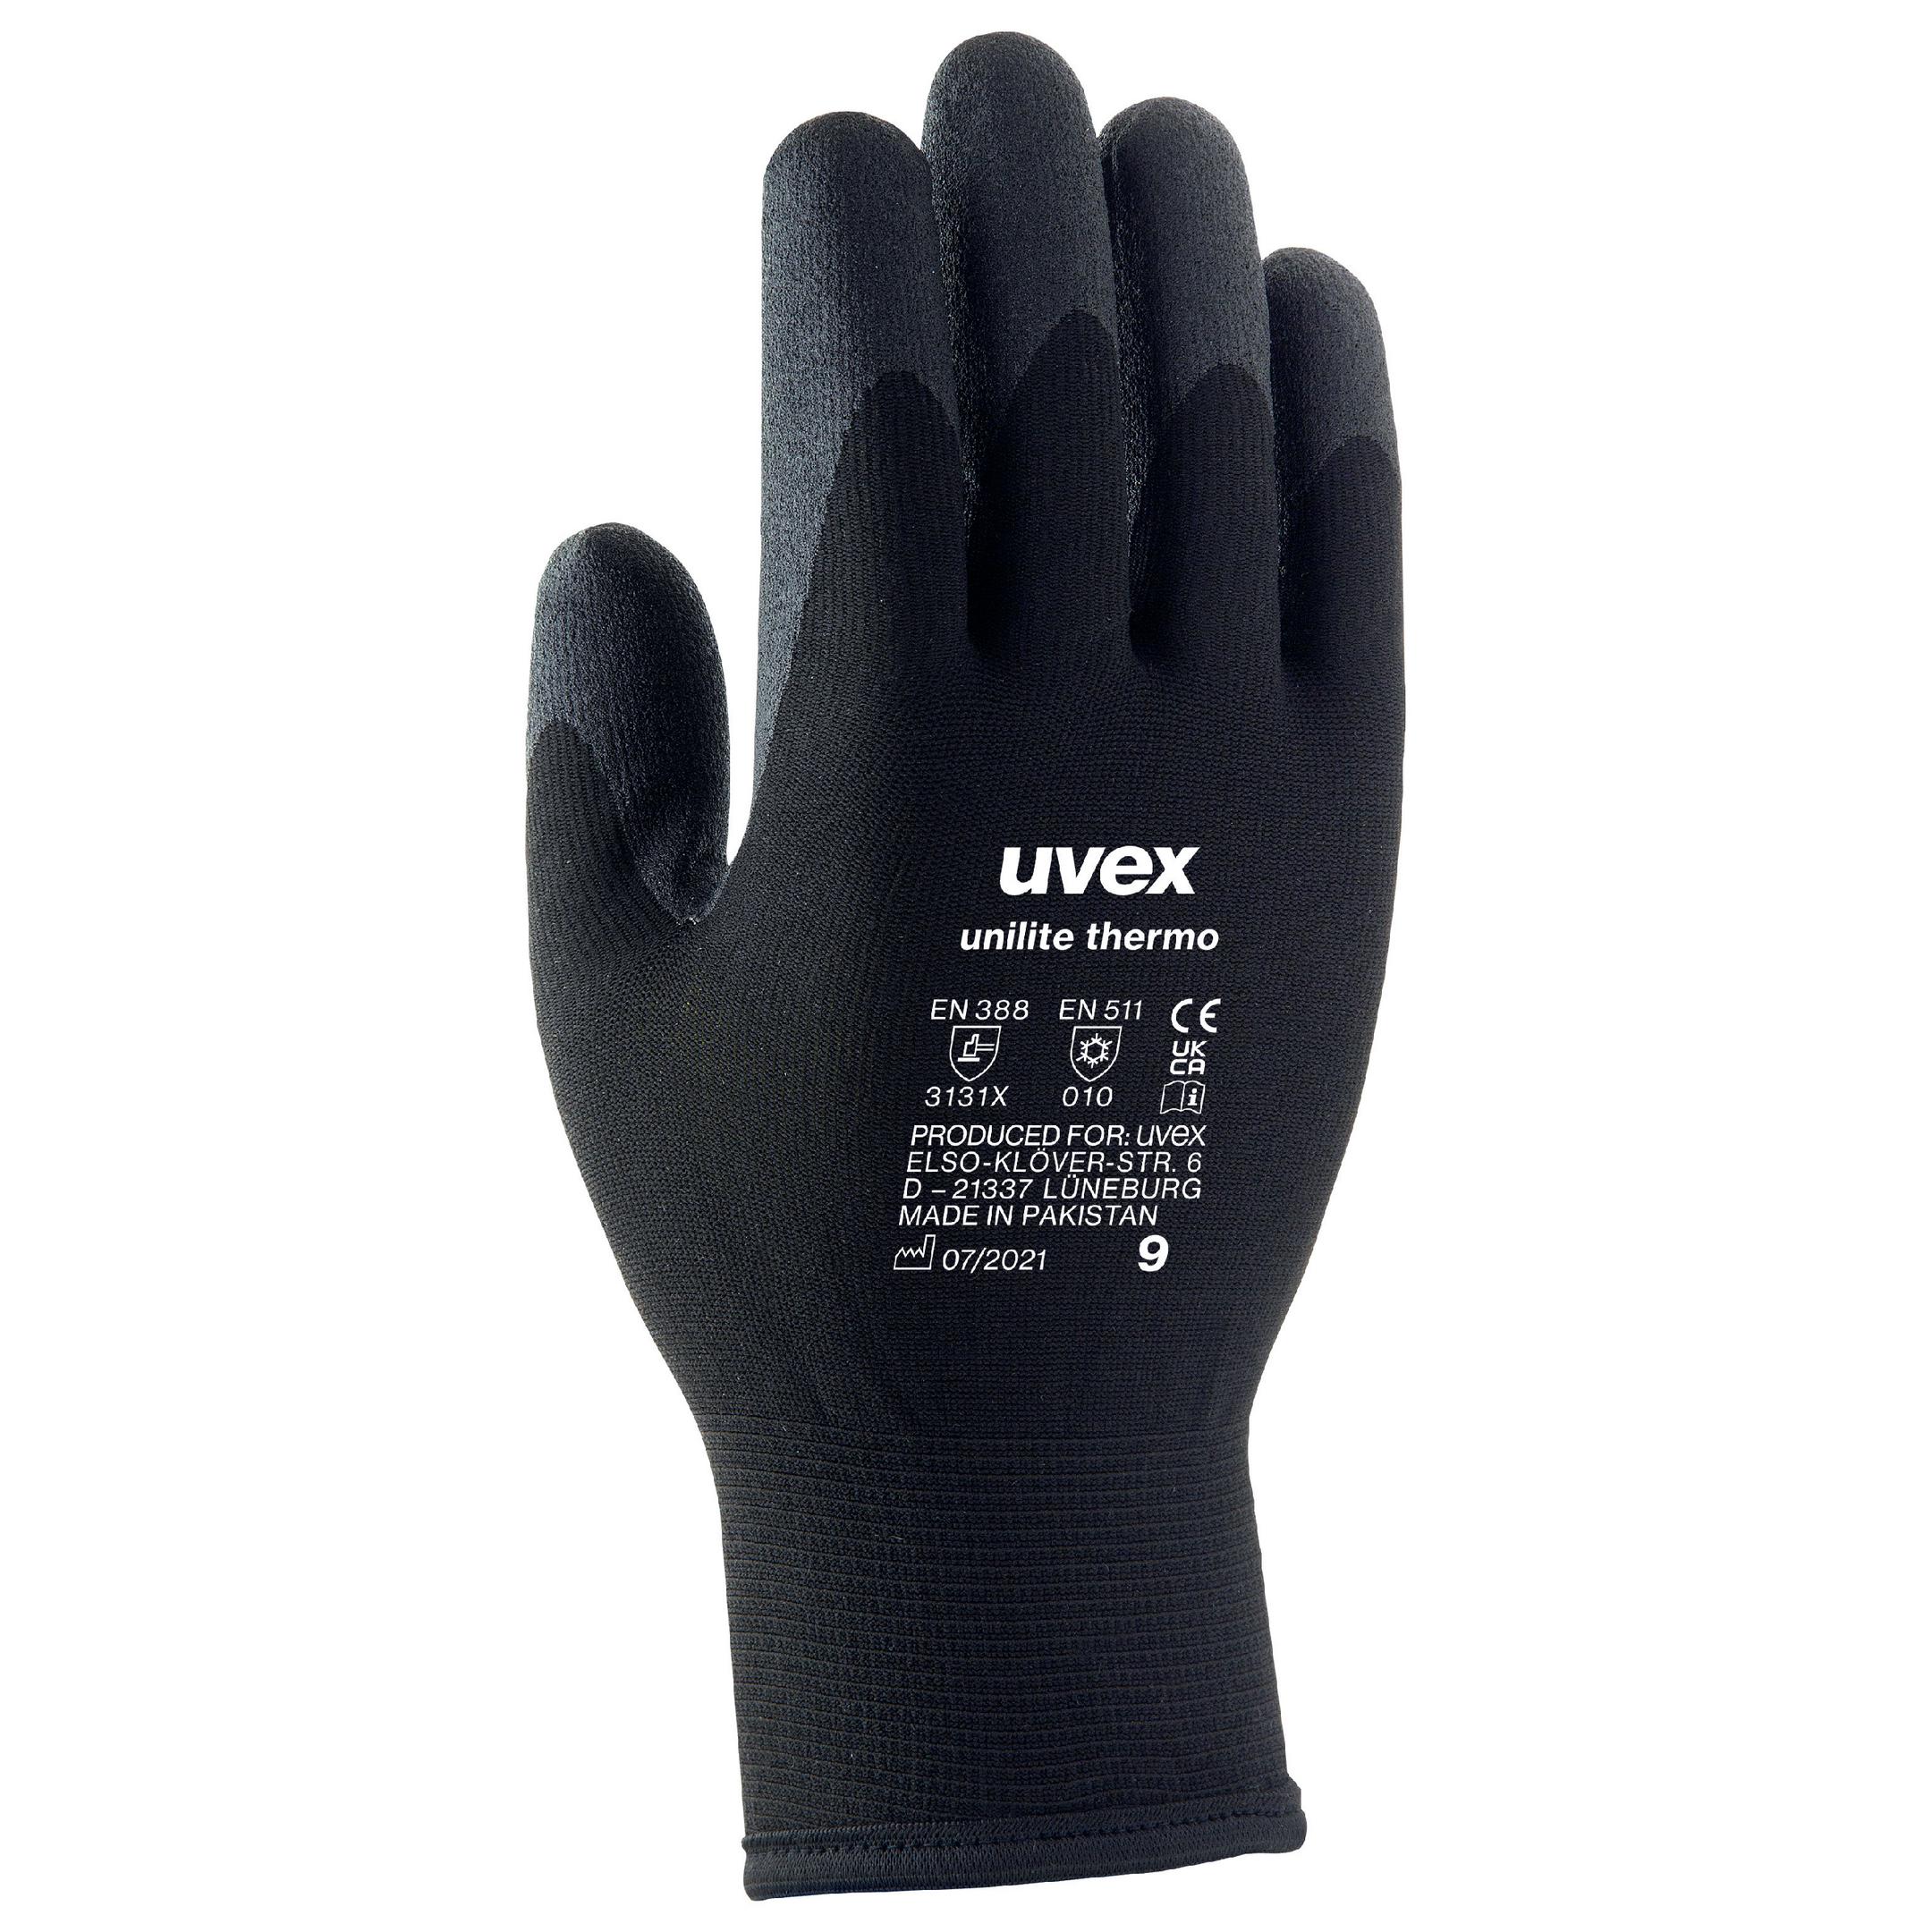 Gants de protection contre le froid Uvex Unilite Thermo Taille 11